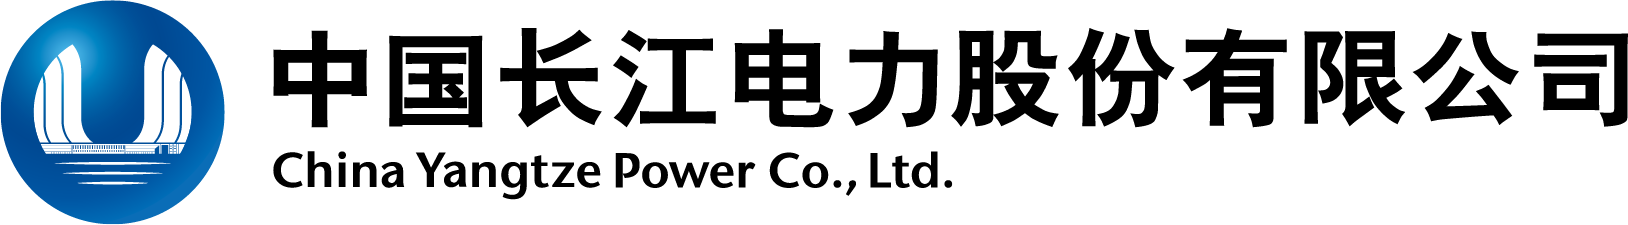 China Yangtze Power Logo png